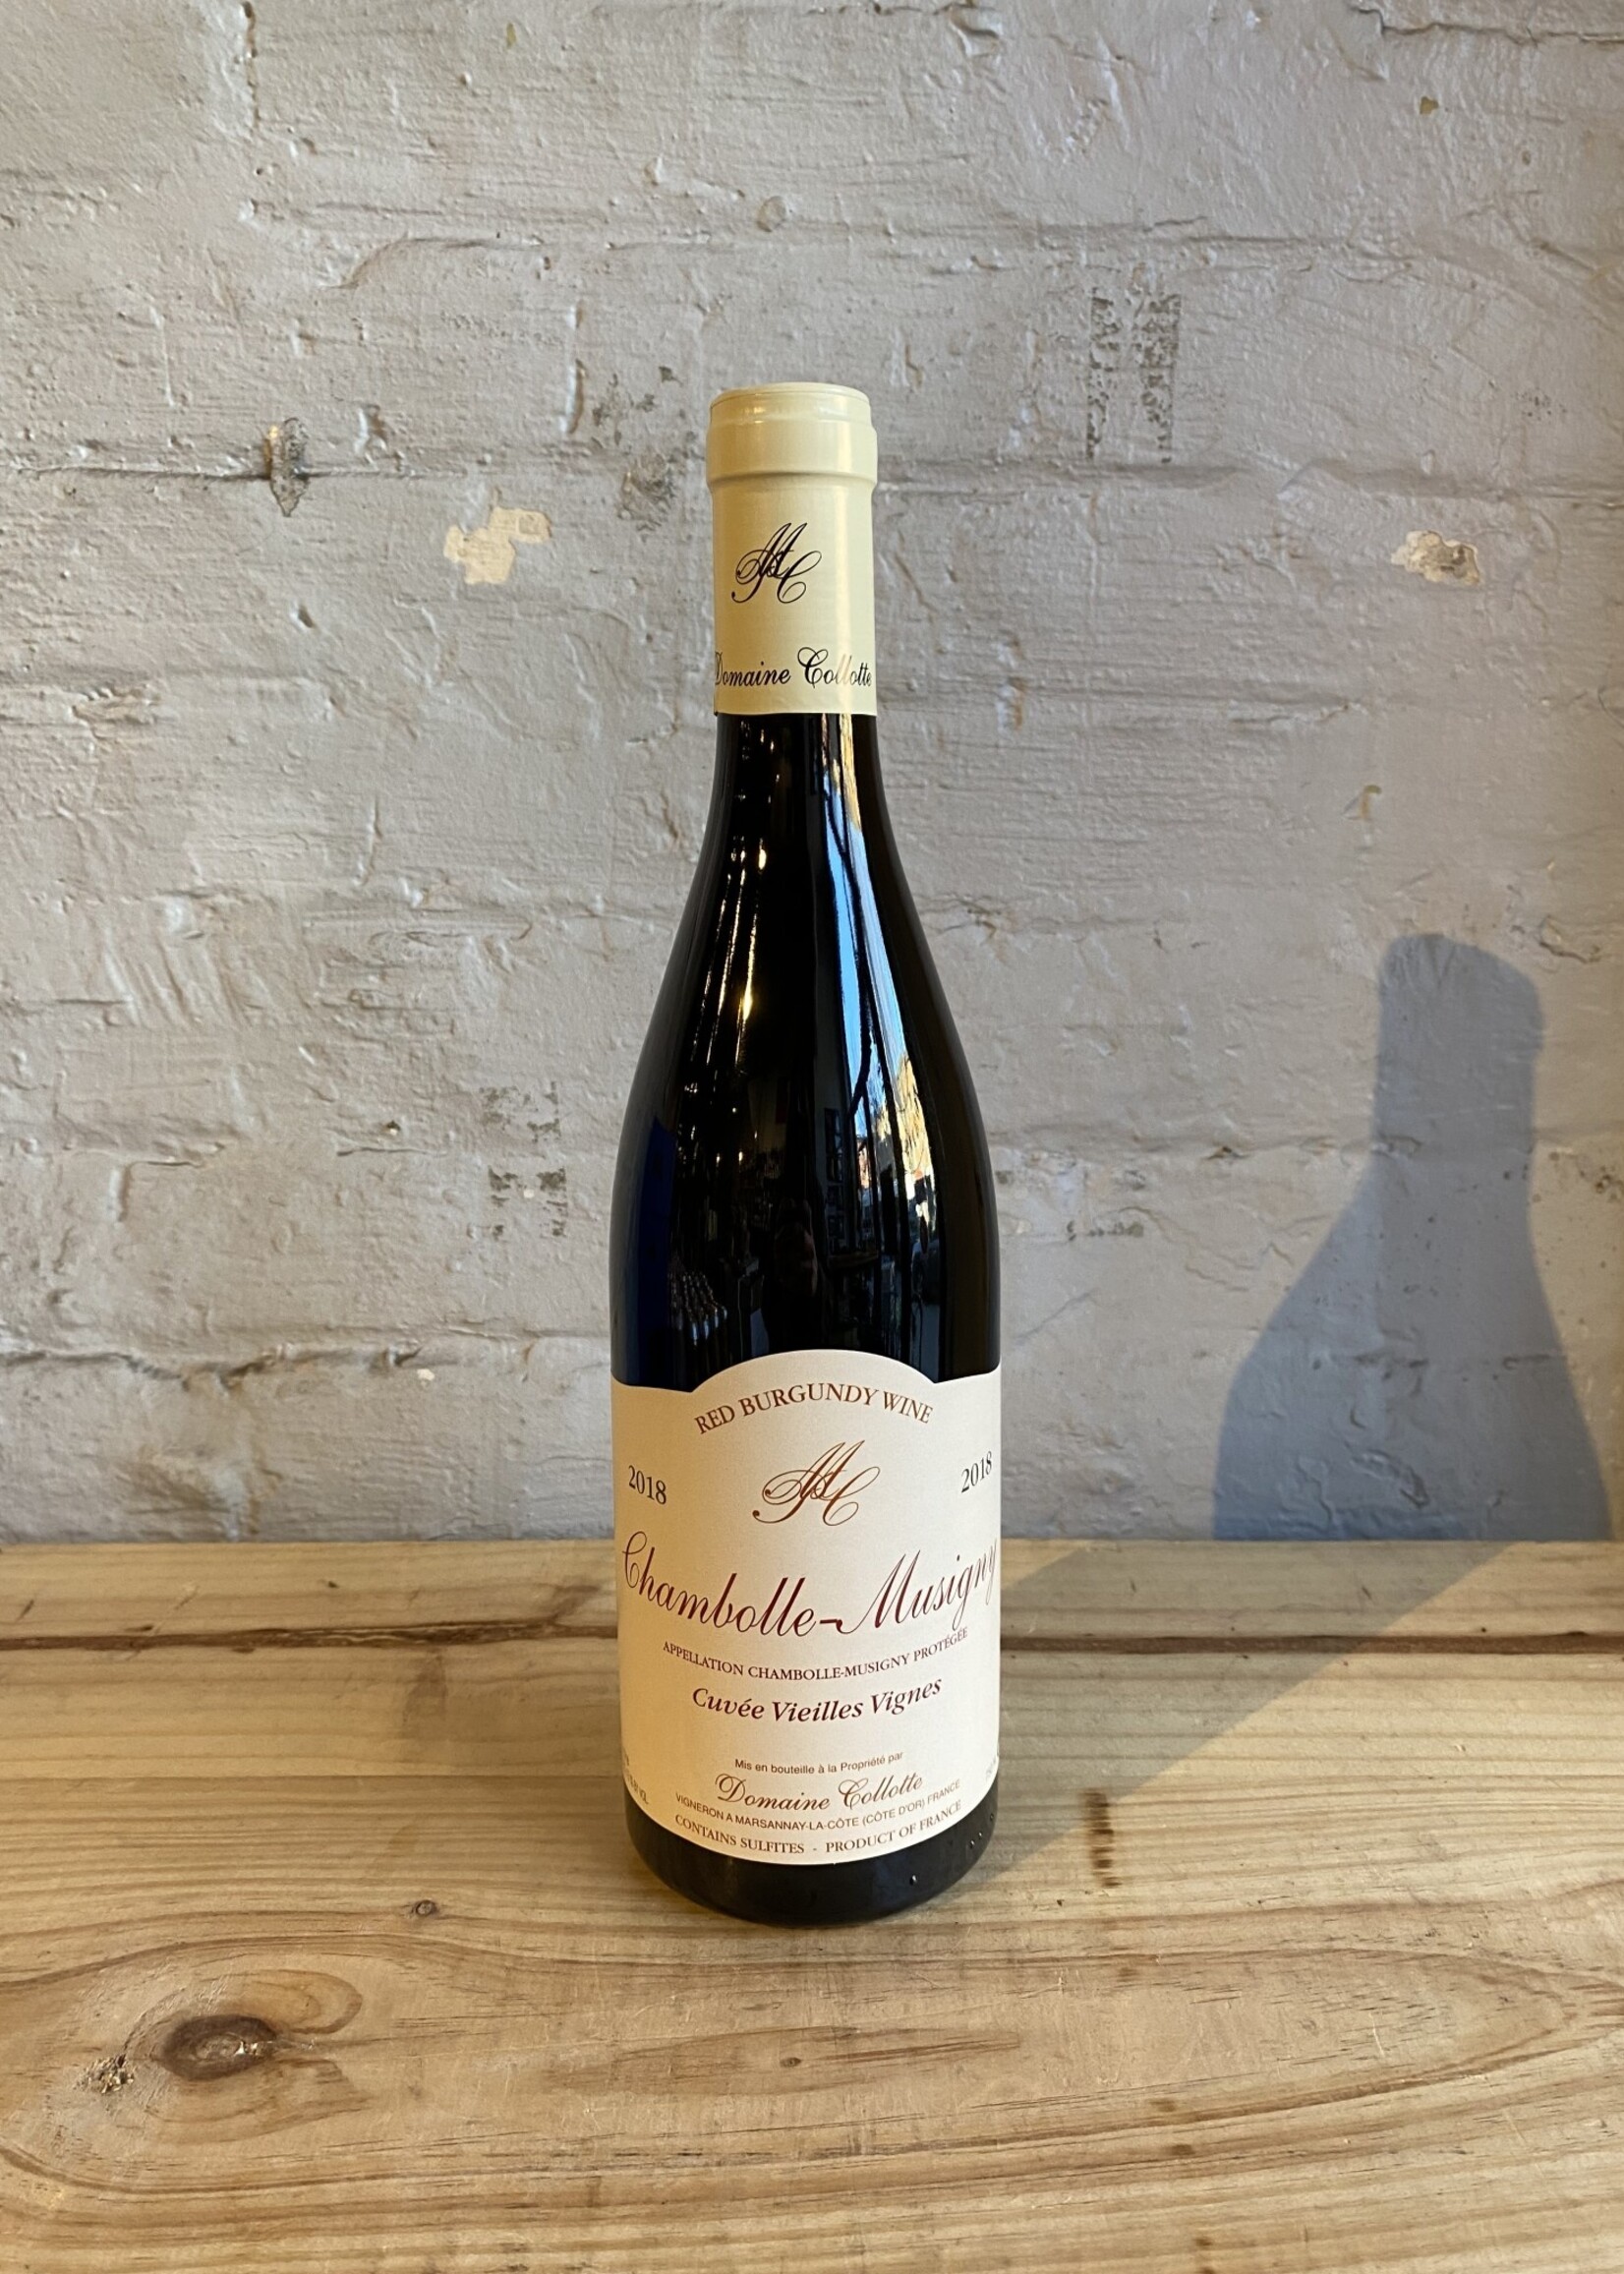 Wine 2018 Domaine Collotte Chambolle Musigny Cuvée Vieilles Vignes - Burgundy, France (750ml)